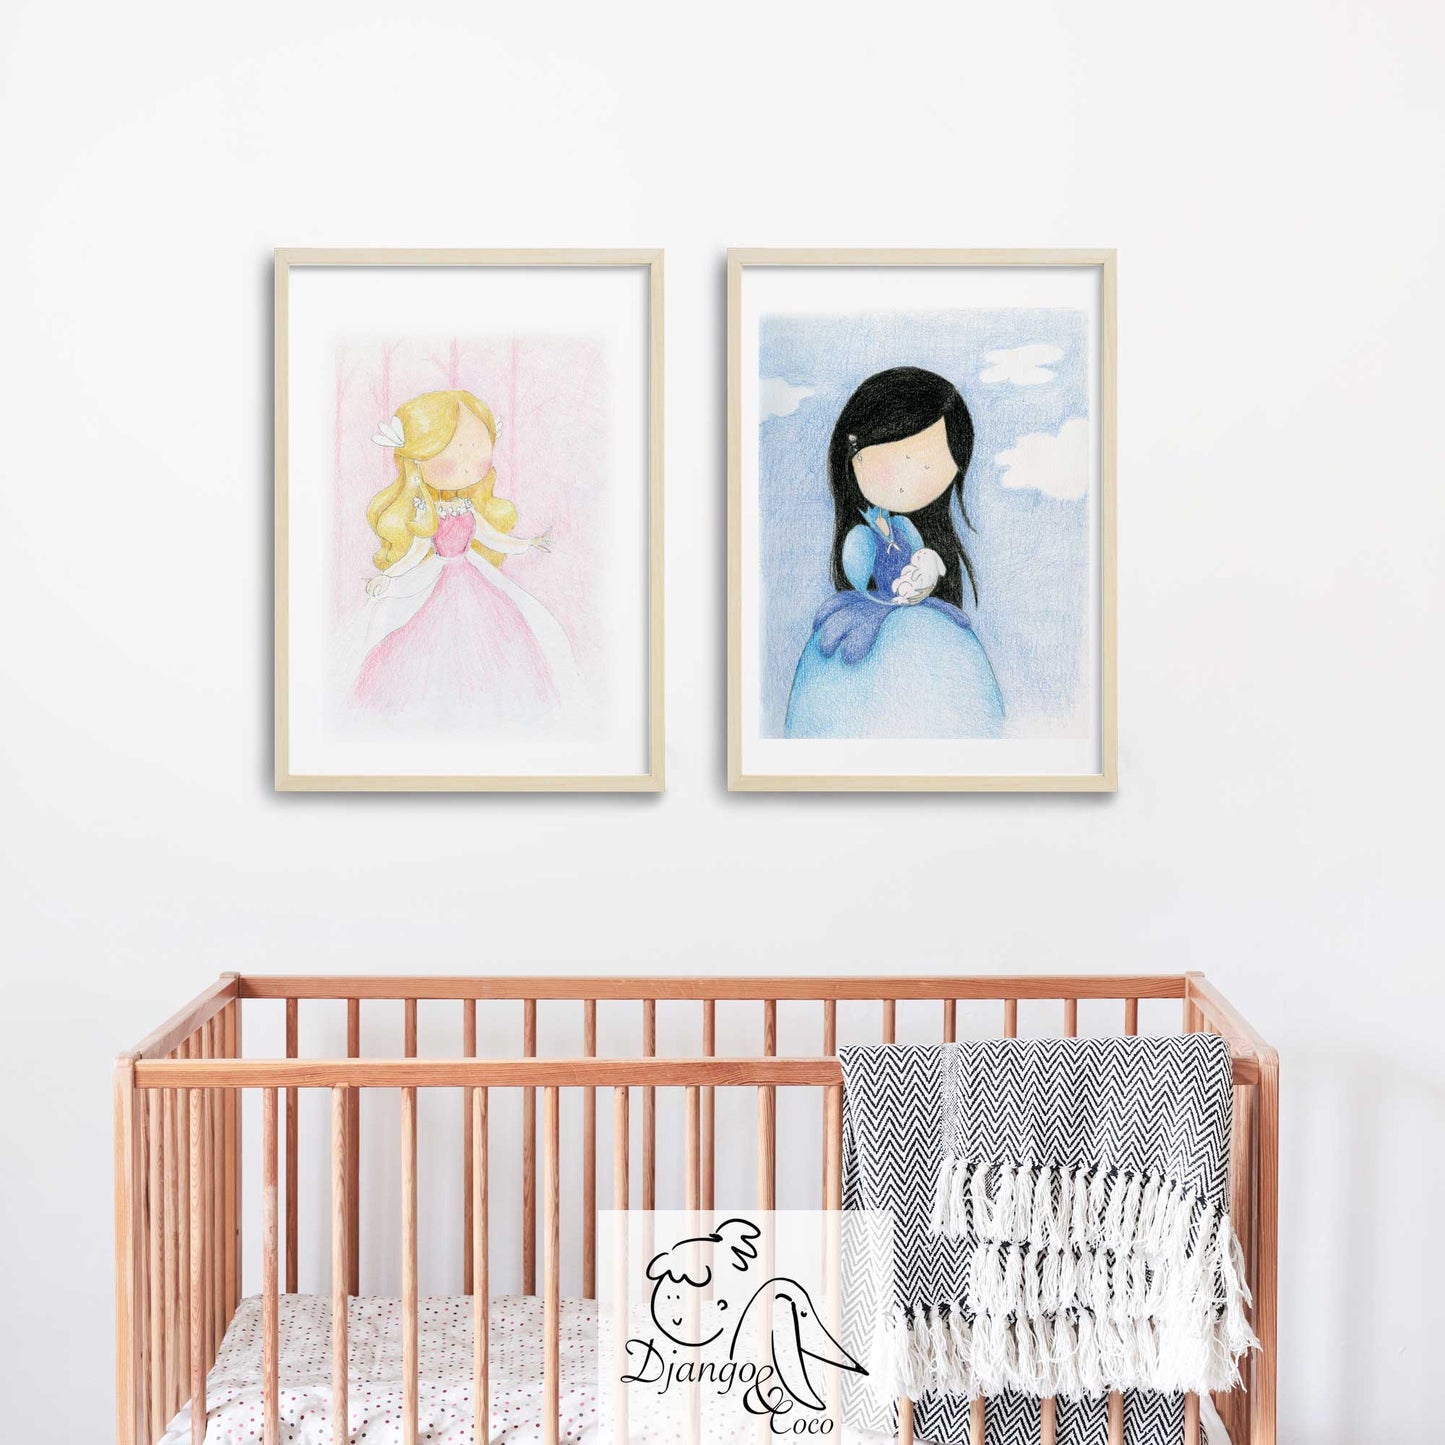 Affiche enfant - "La princesse bleu avec son lapin blanc"